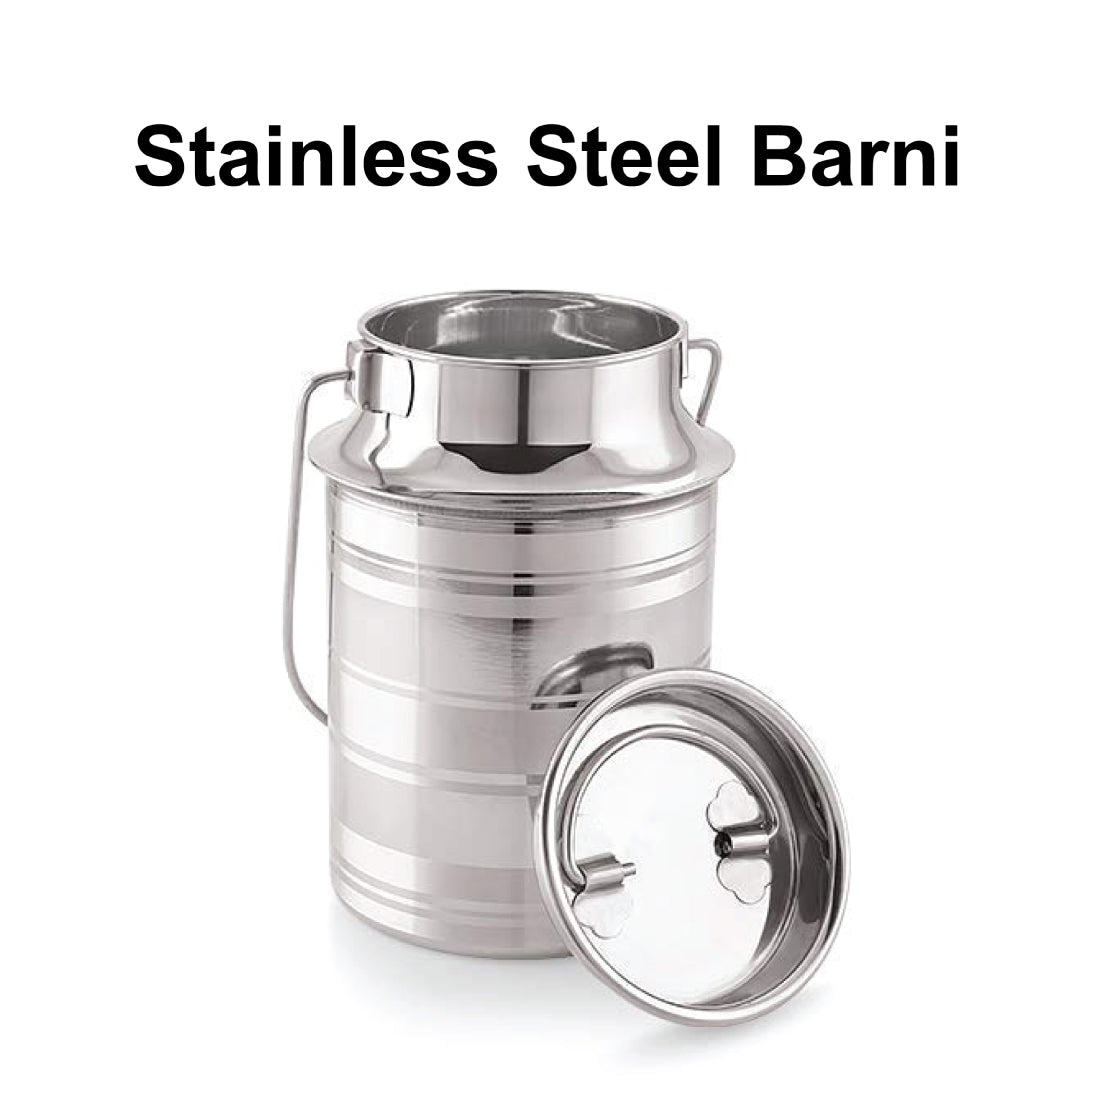 Stainless Steel Barni